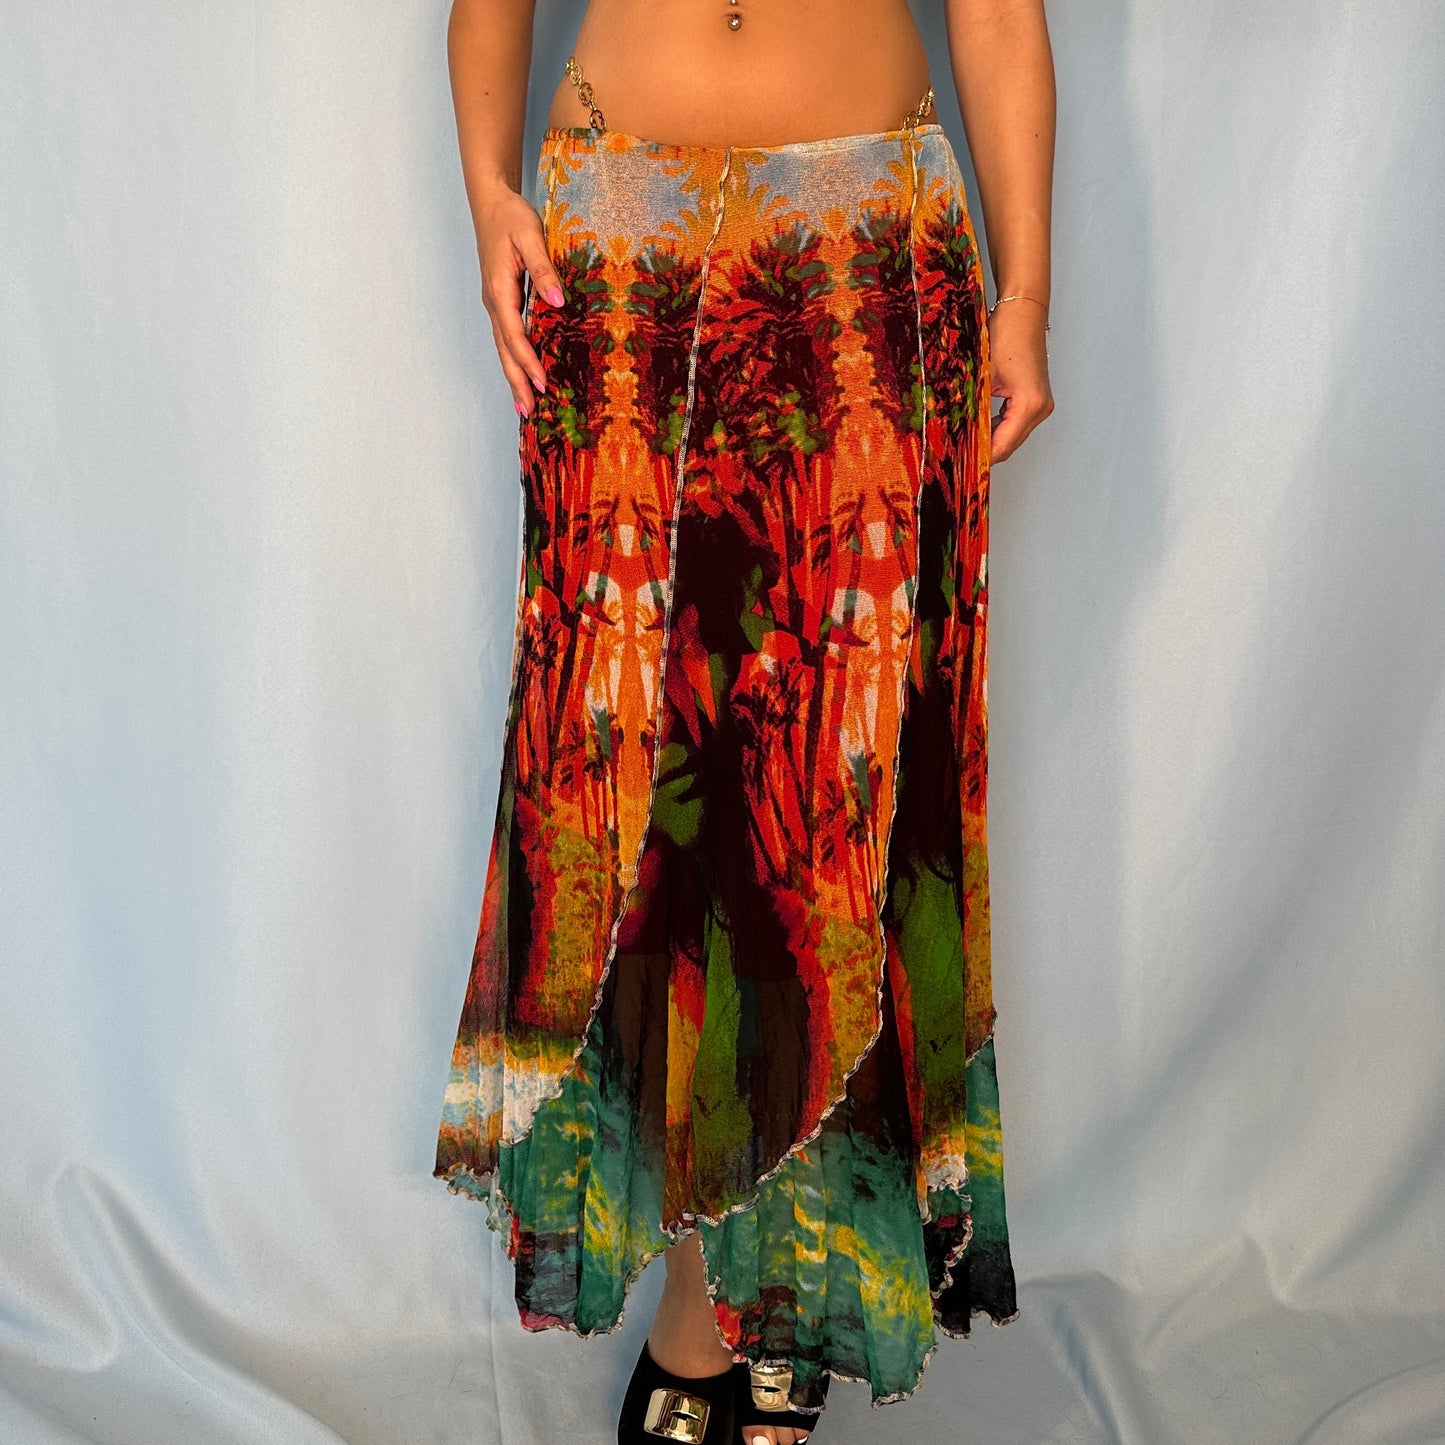 Jean Paul Gaultier Spring 2000 Tropical Print Mesh Skirt